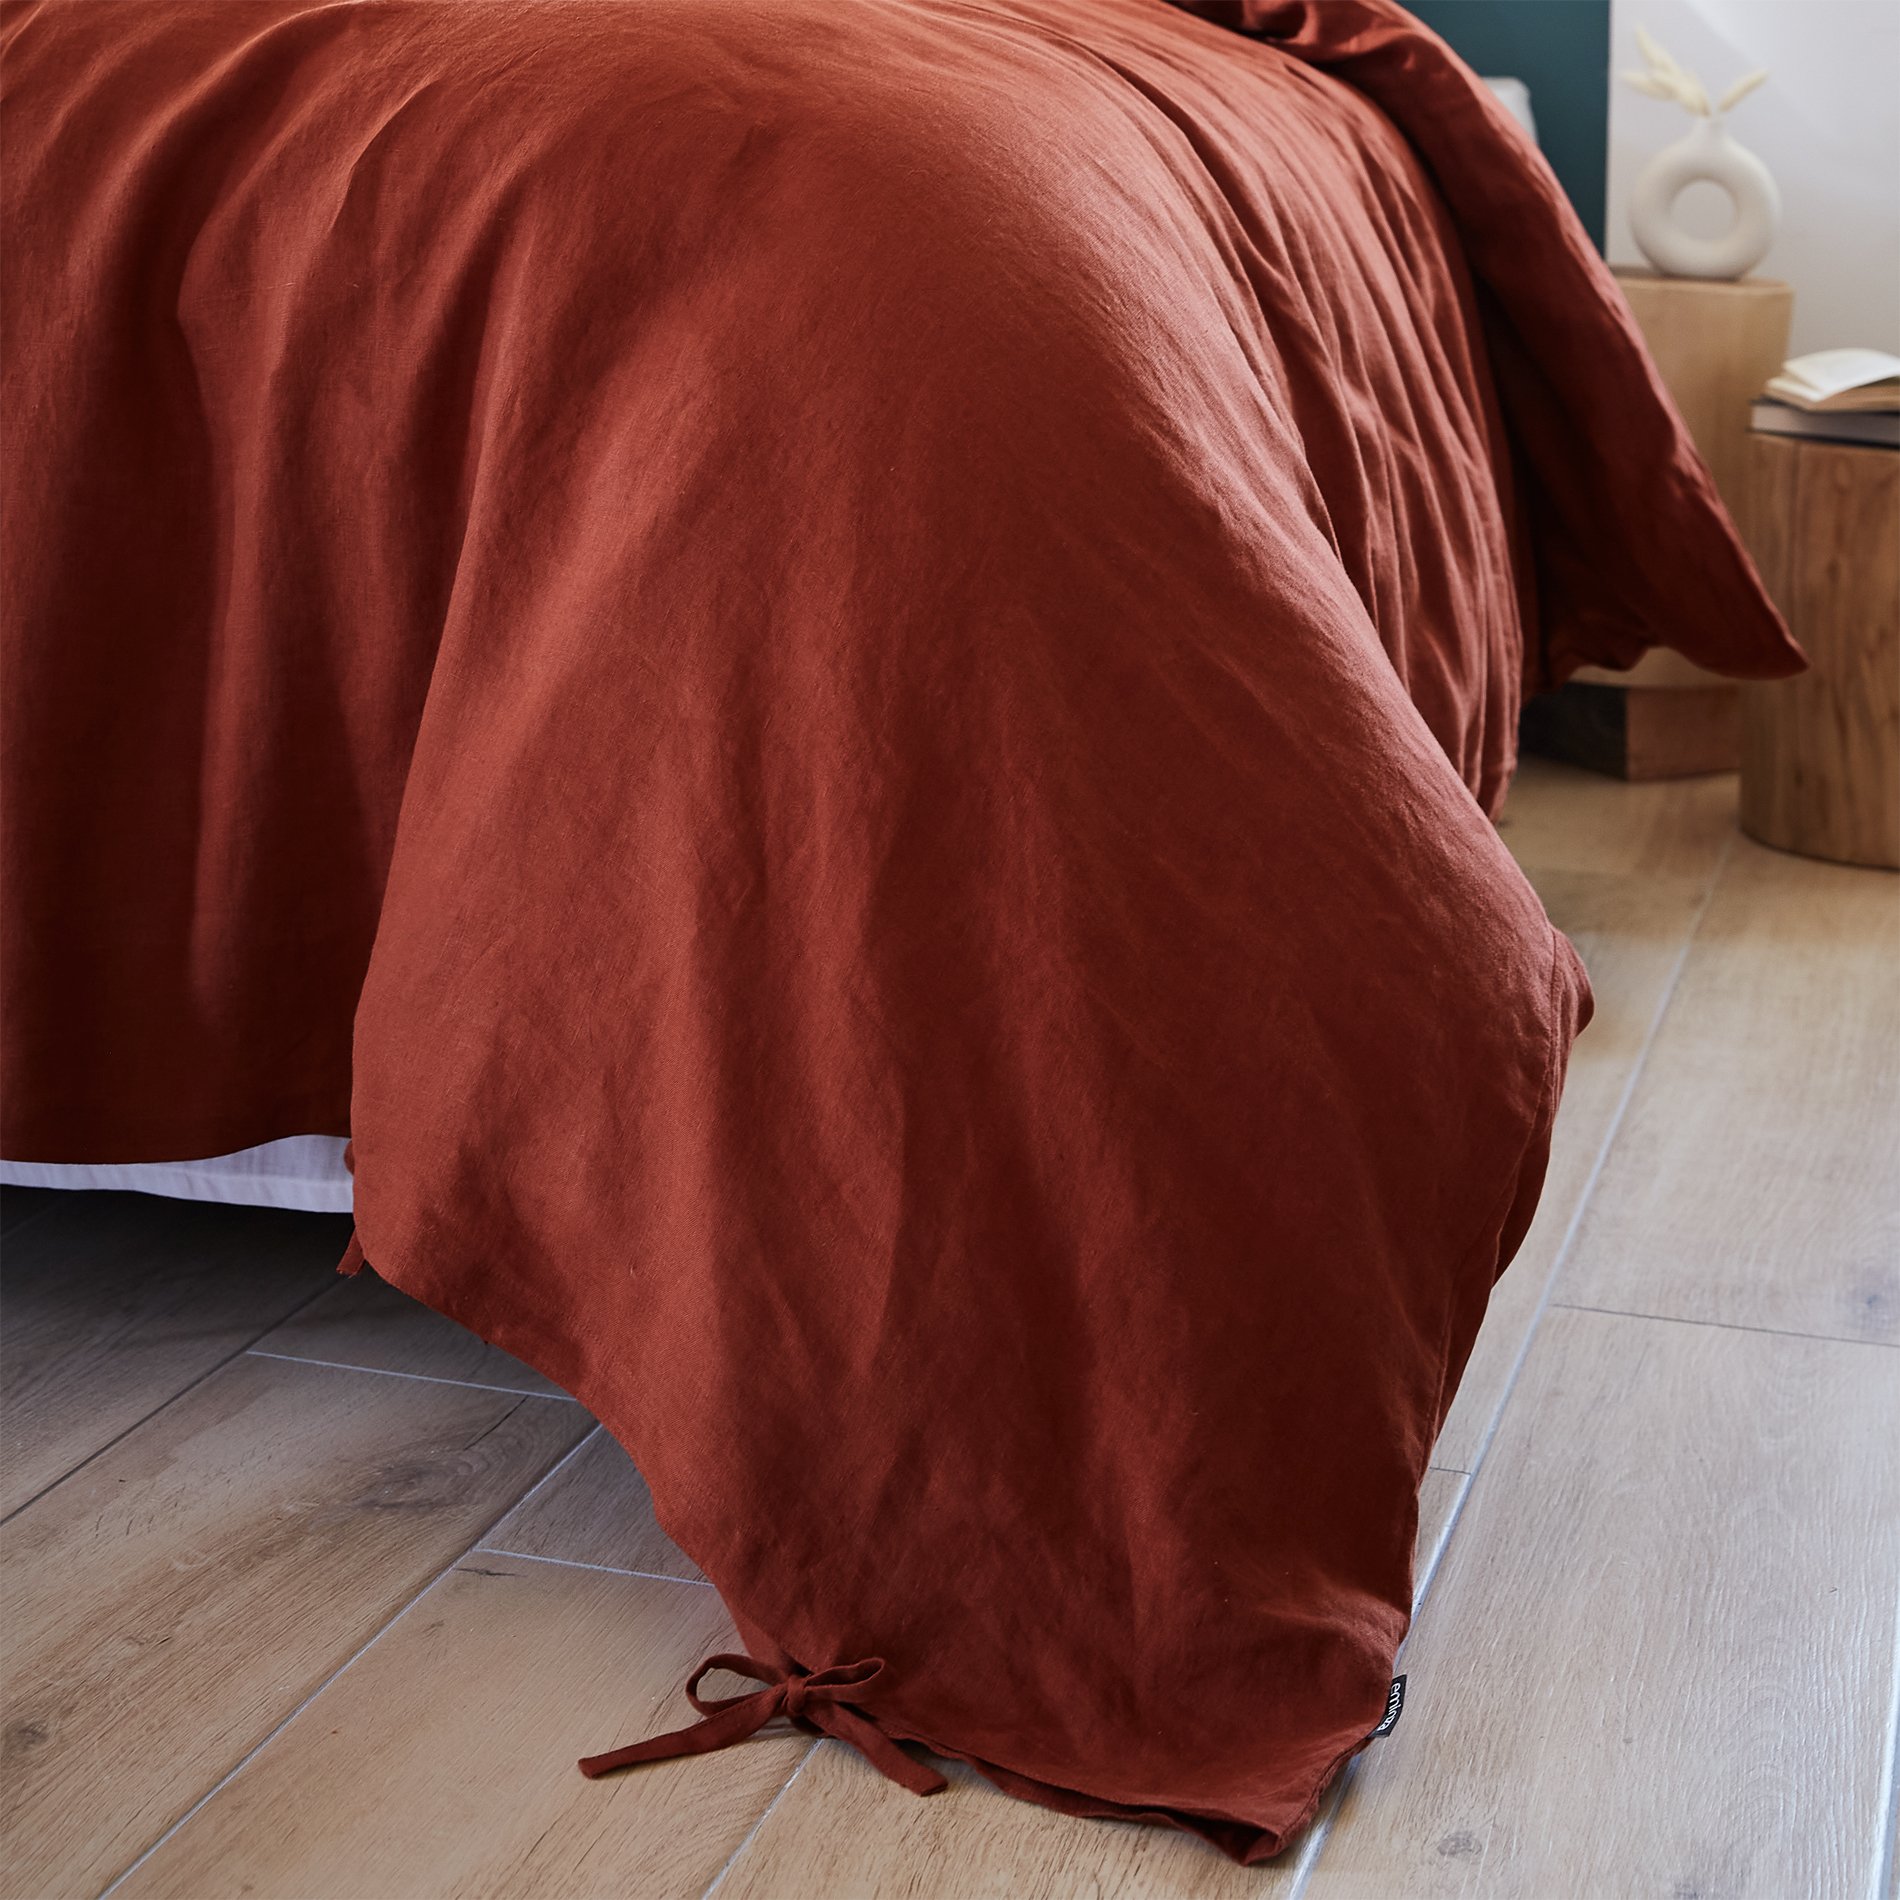 Edredones nórdicos para cama - Terrakotta